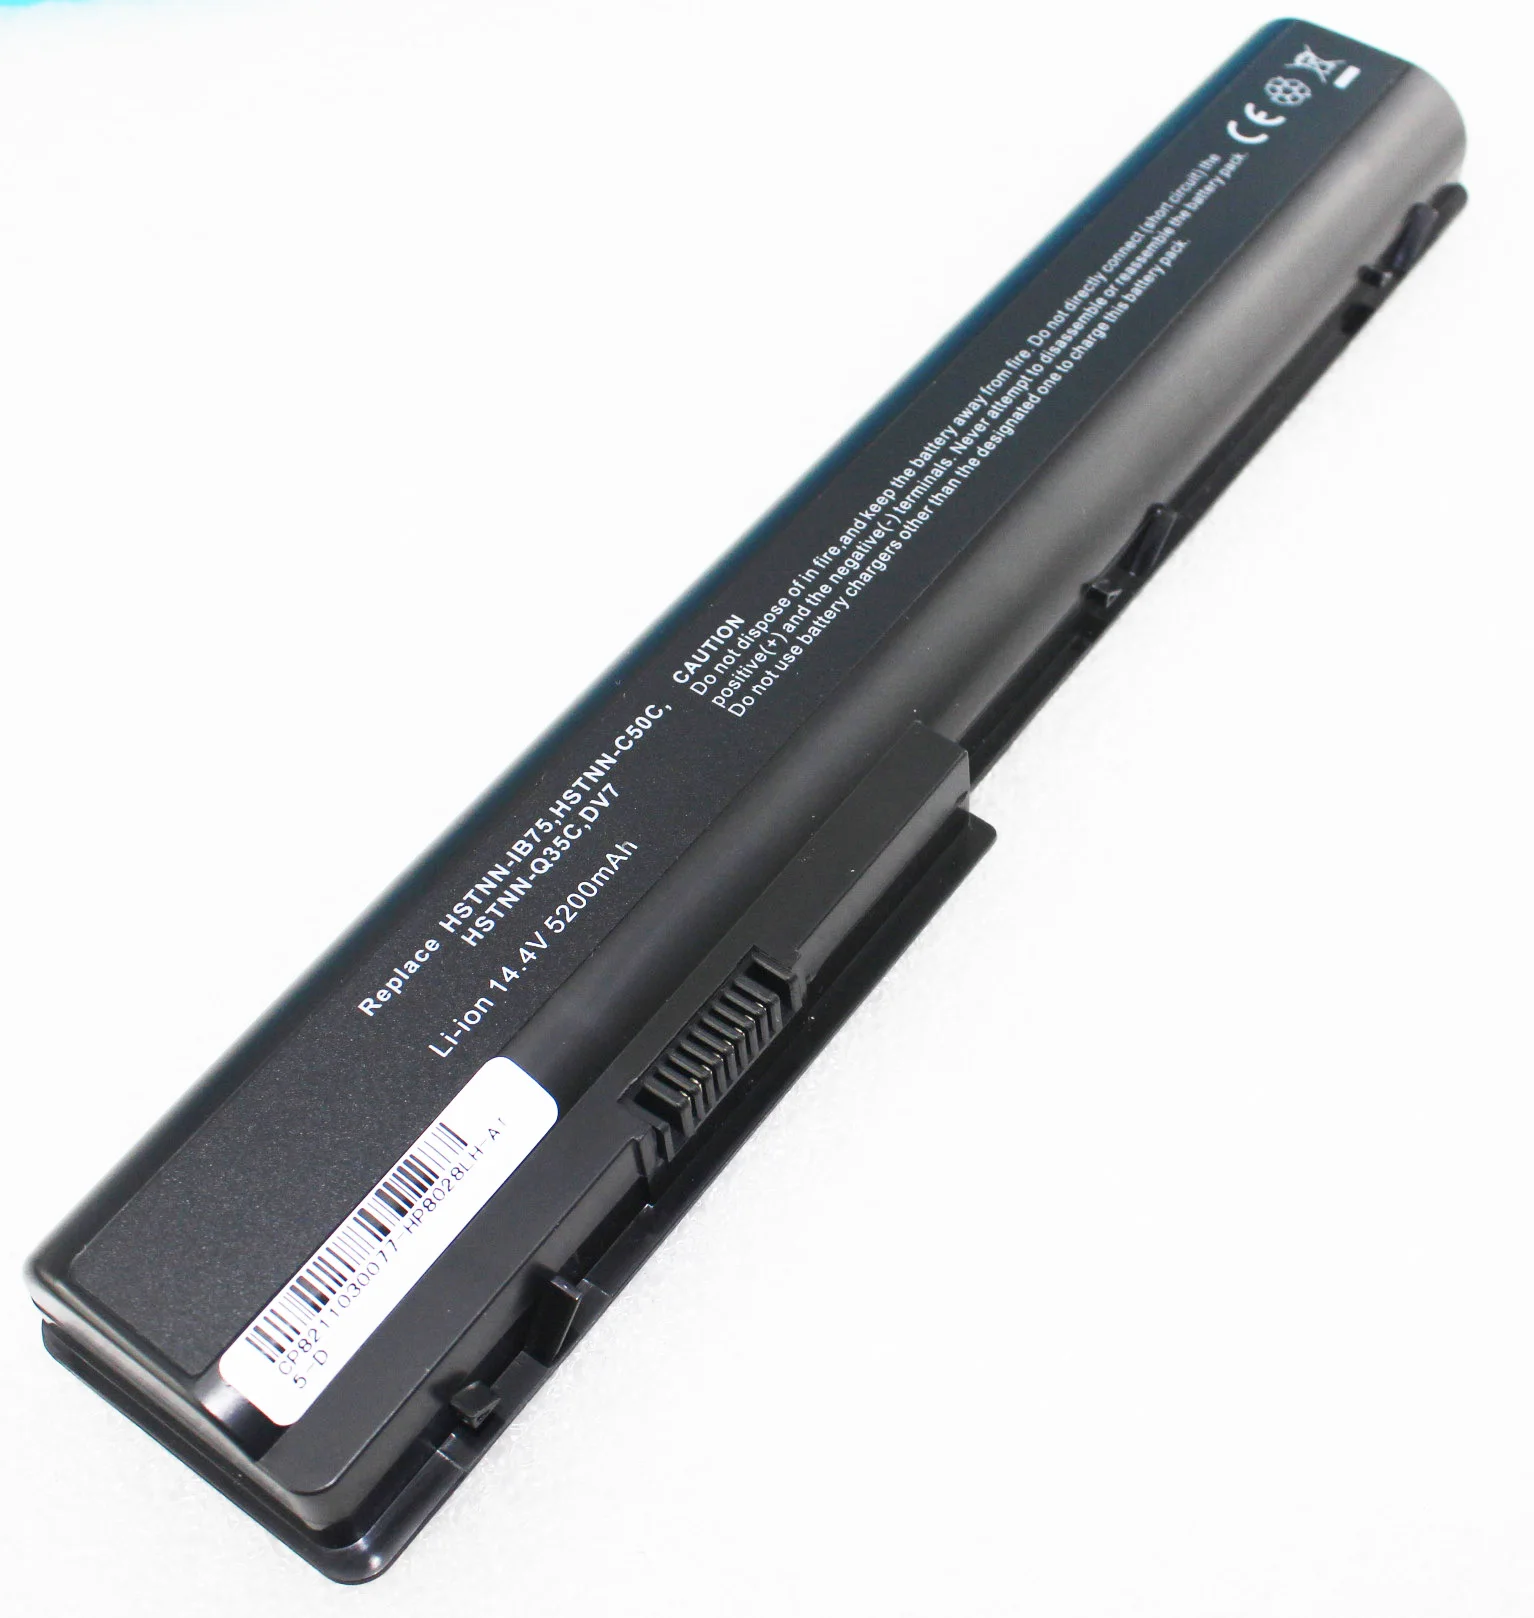 

HUAHERO 8Cell Battery for HP Pavilion DV7 DV8 HDX X18-1000 dv7t dv7z dv8t 464059-121 HSTNN-OB75 XB75 DB74 DB75 IB74 516355-001